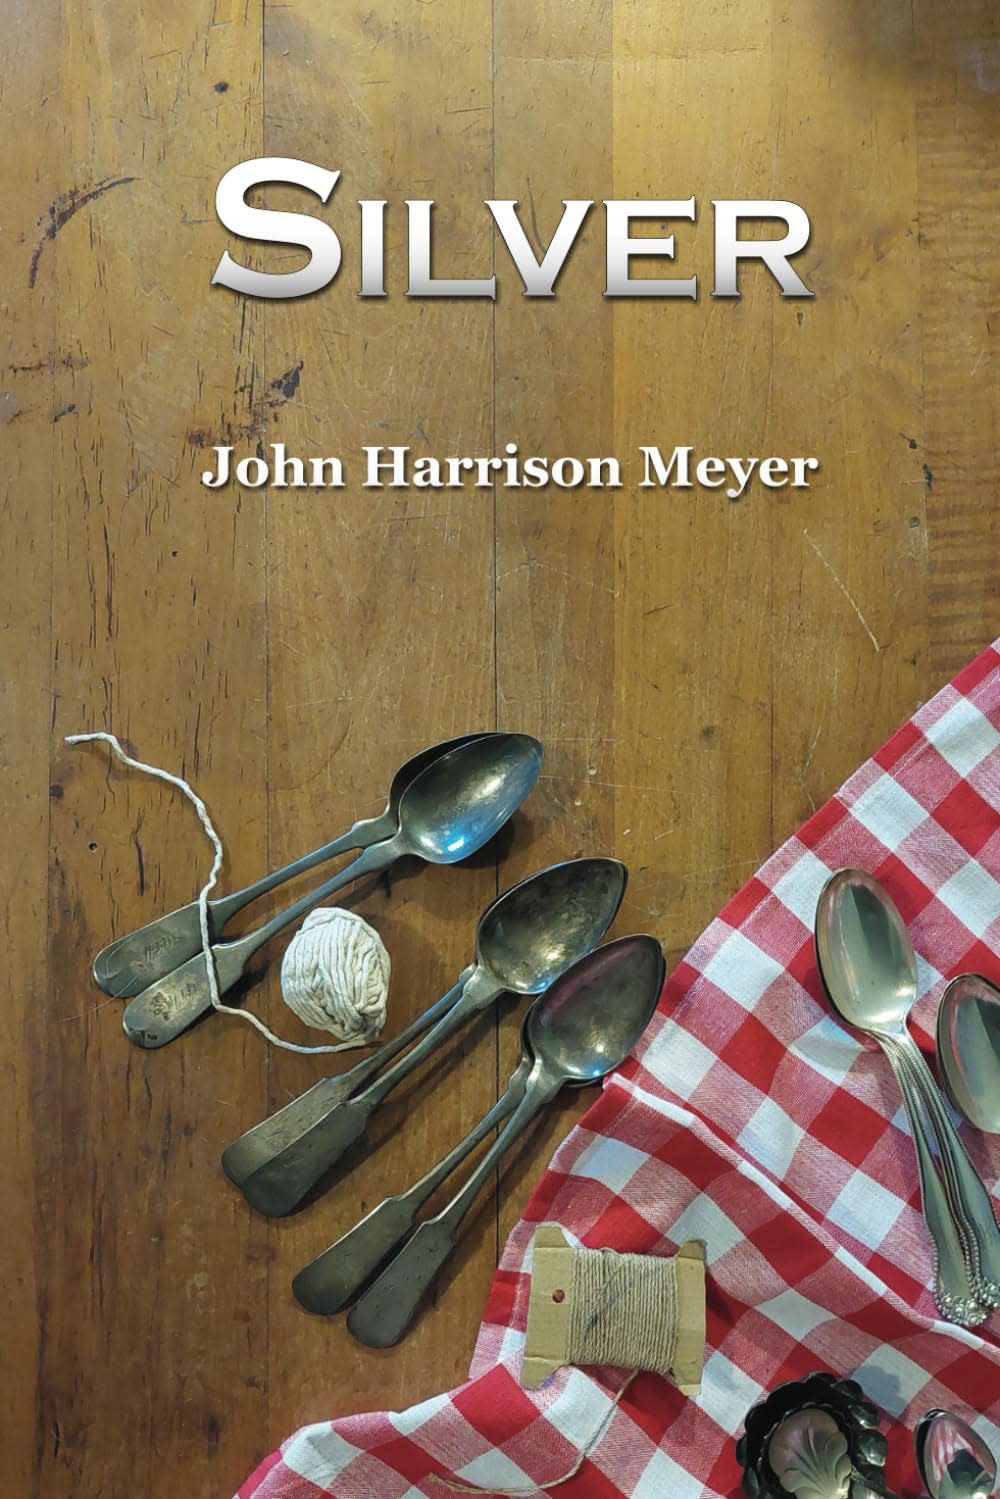 Wilmington writer John Harrison Meyer's new historical novel, set in the Civil War, is "Silver."